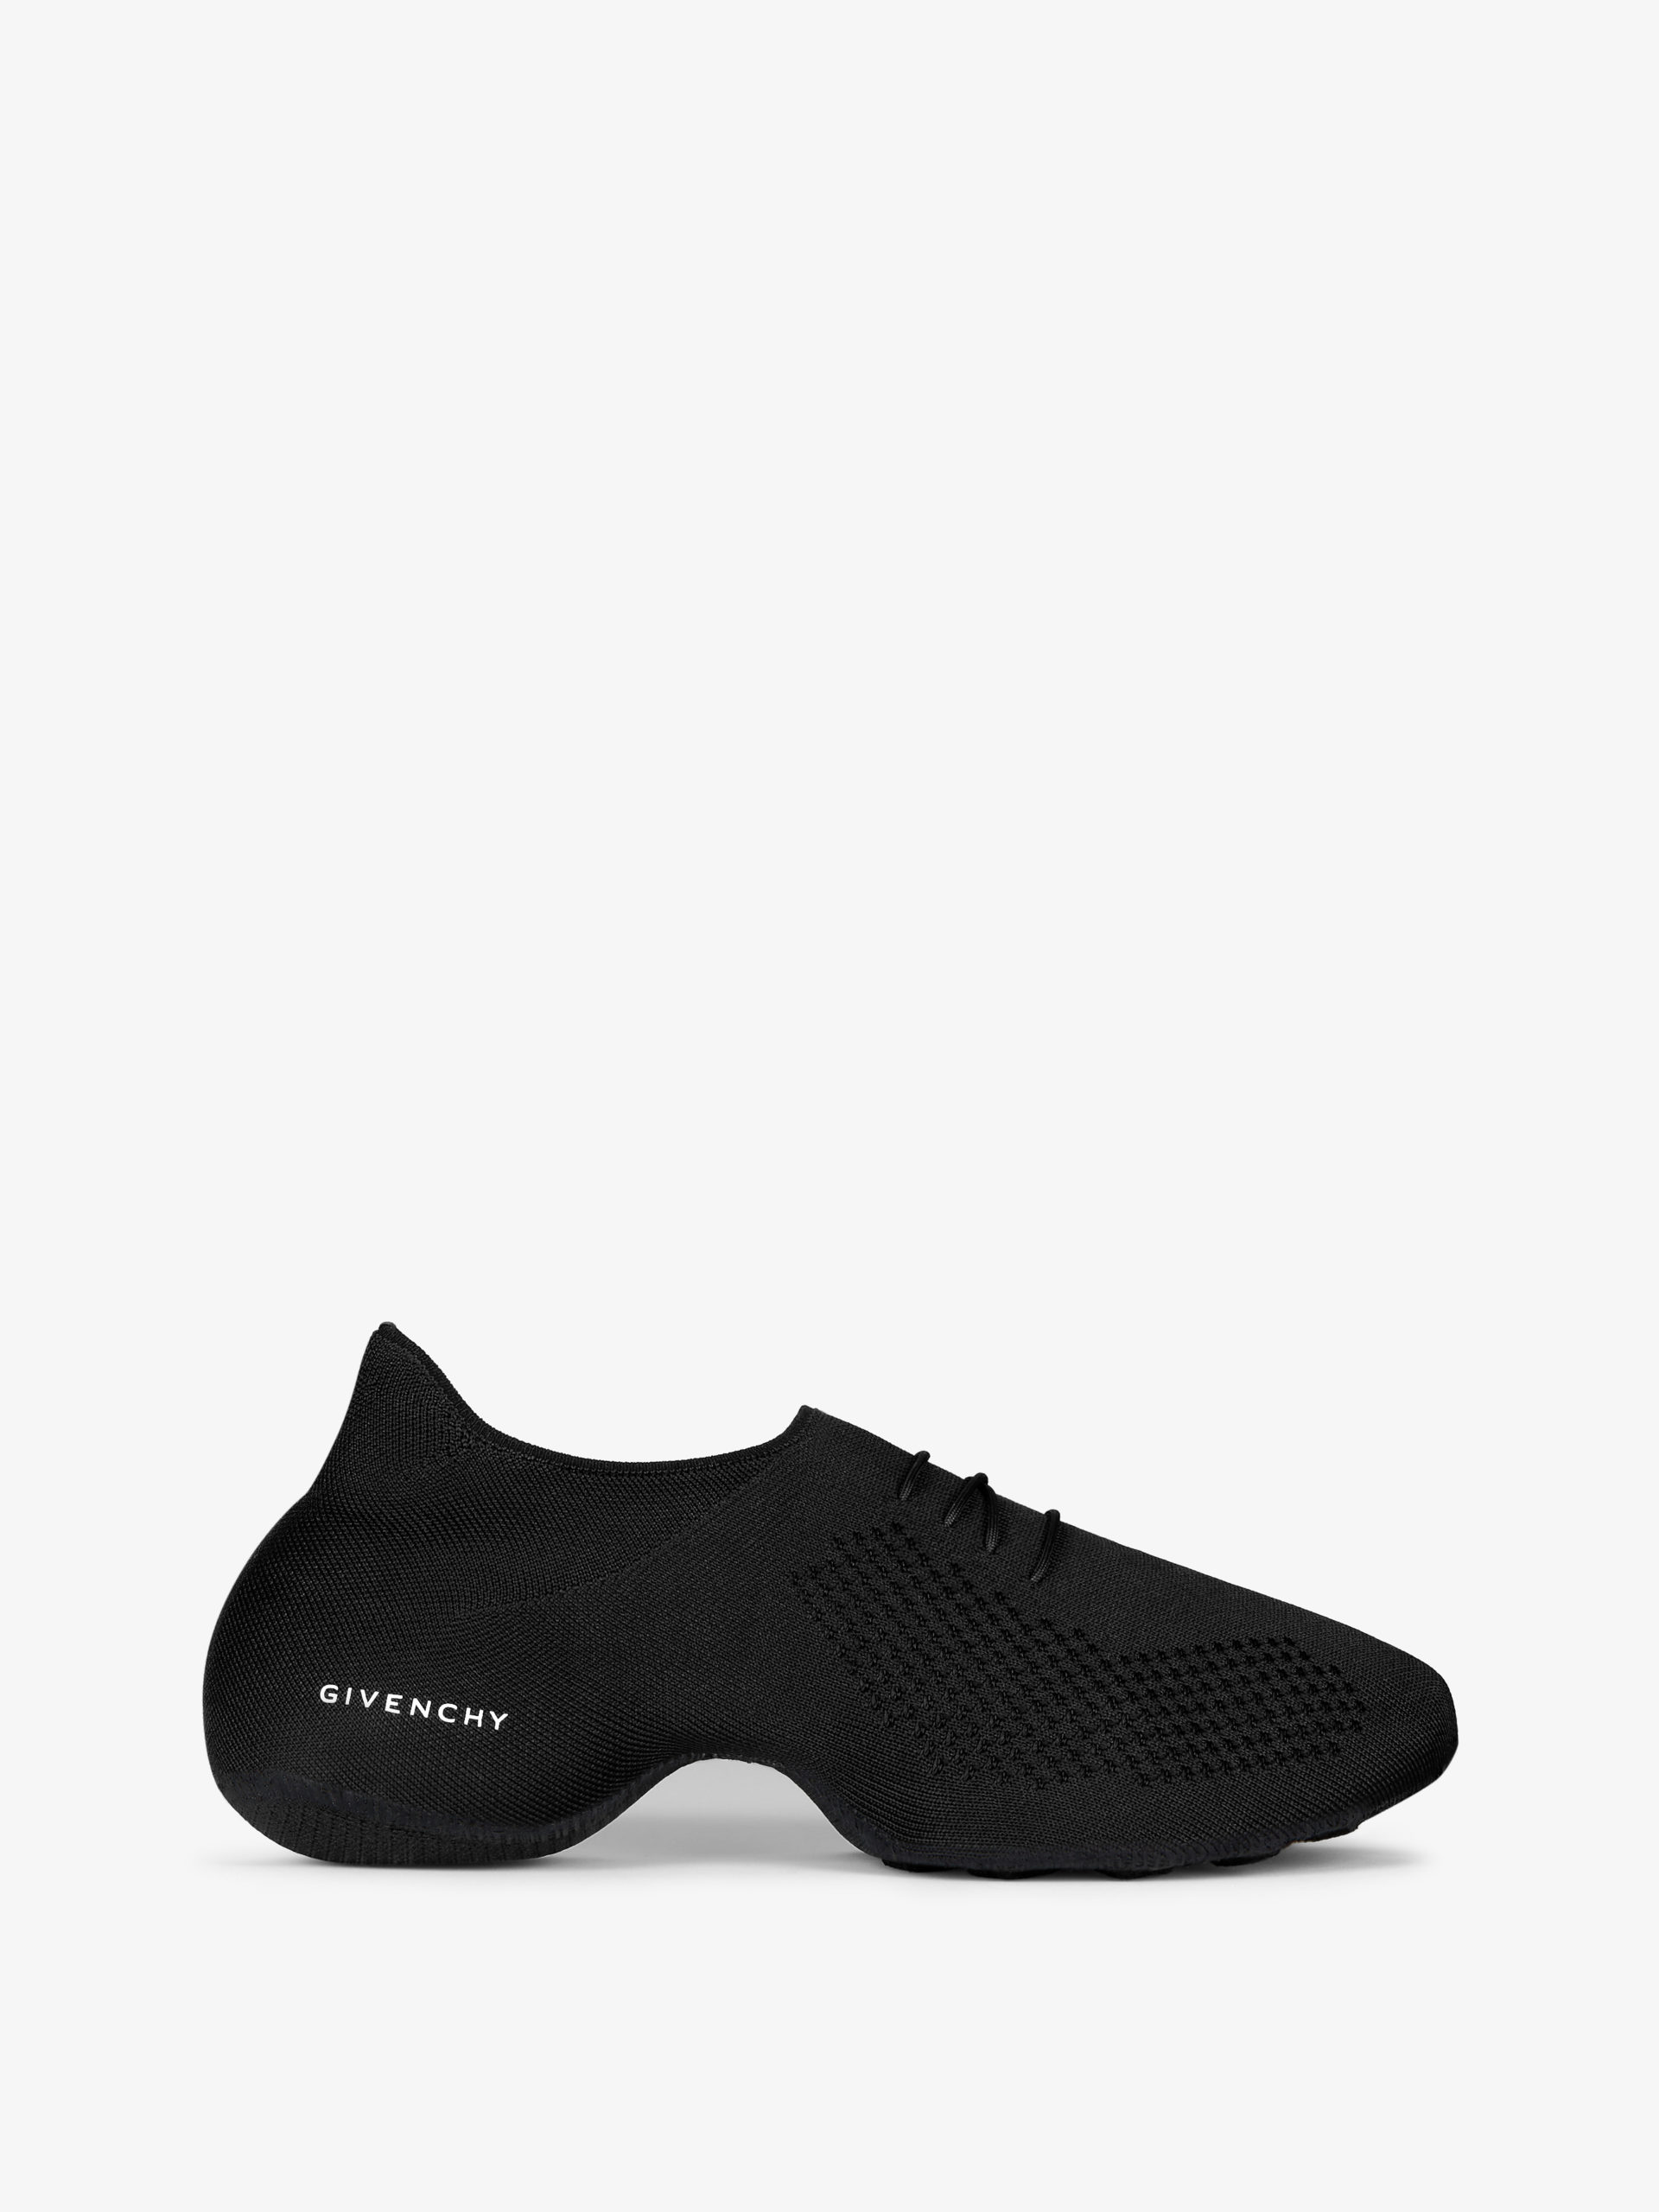 Matthew M. Williams Unveils New Givenchy TK-360 Men's Sneaker - V 